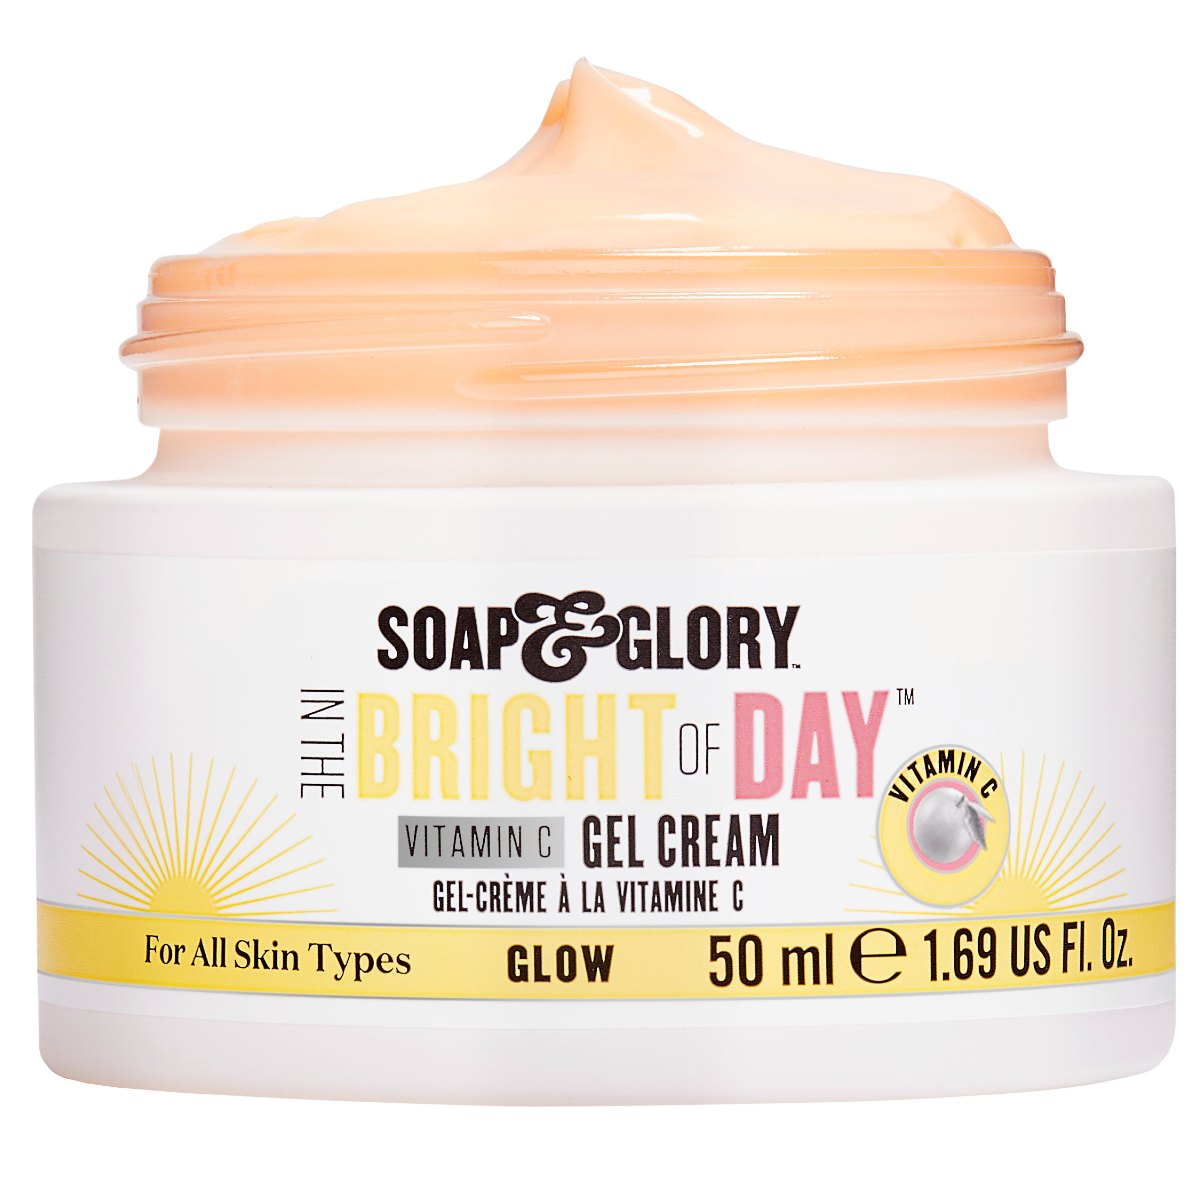 In The Bright Of Day Vitamin C Gel Day Face Cream 